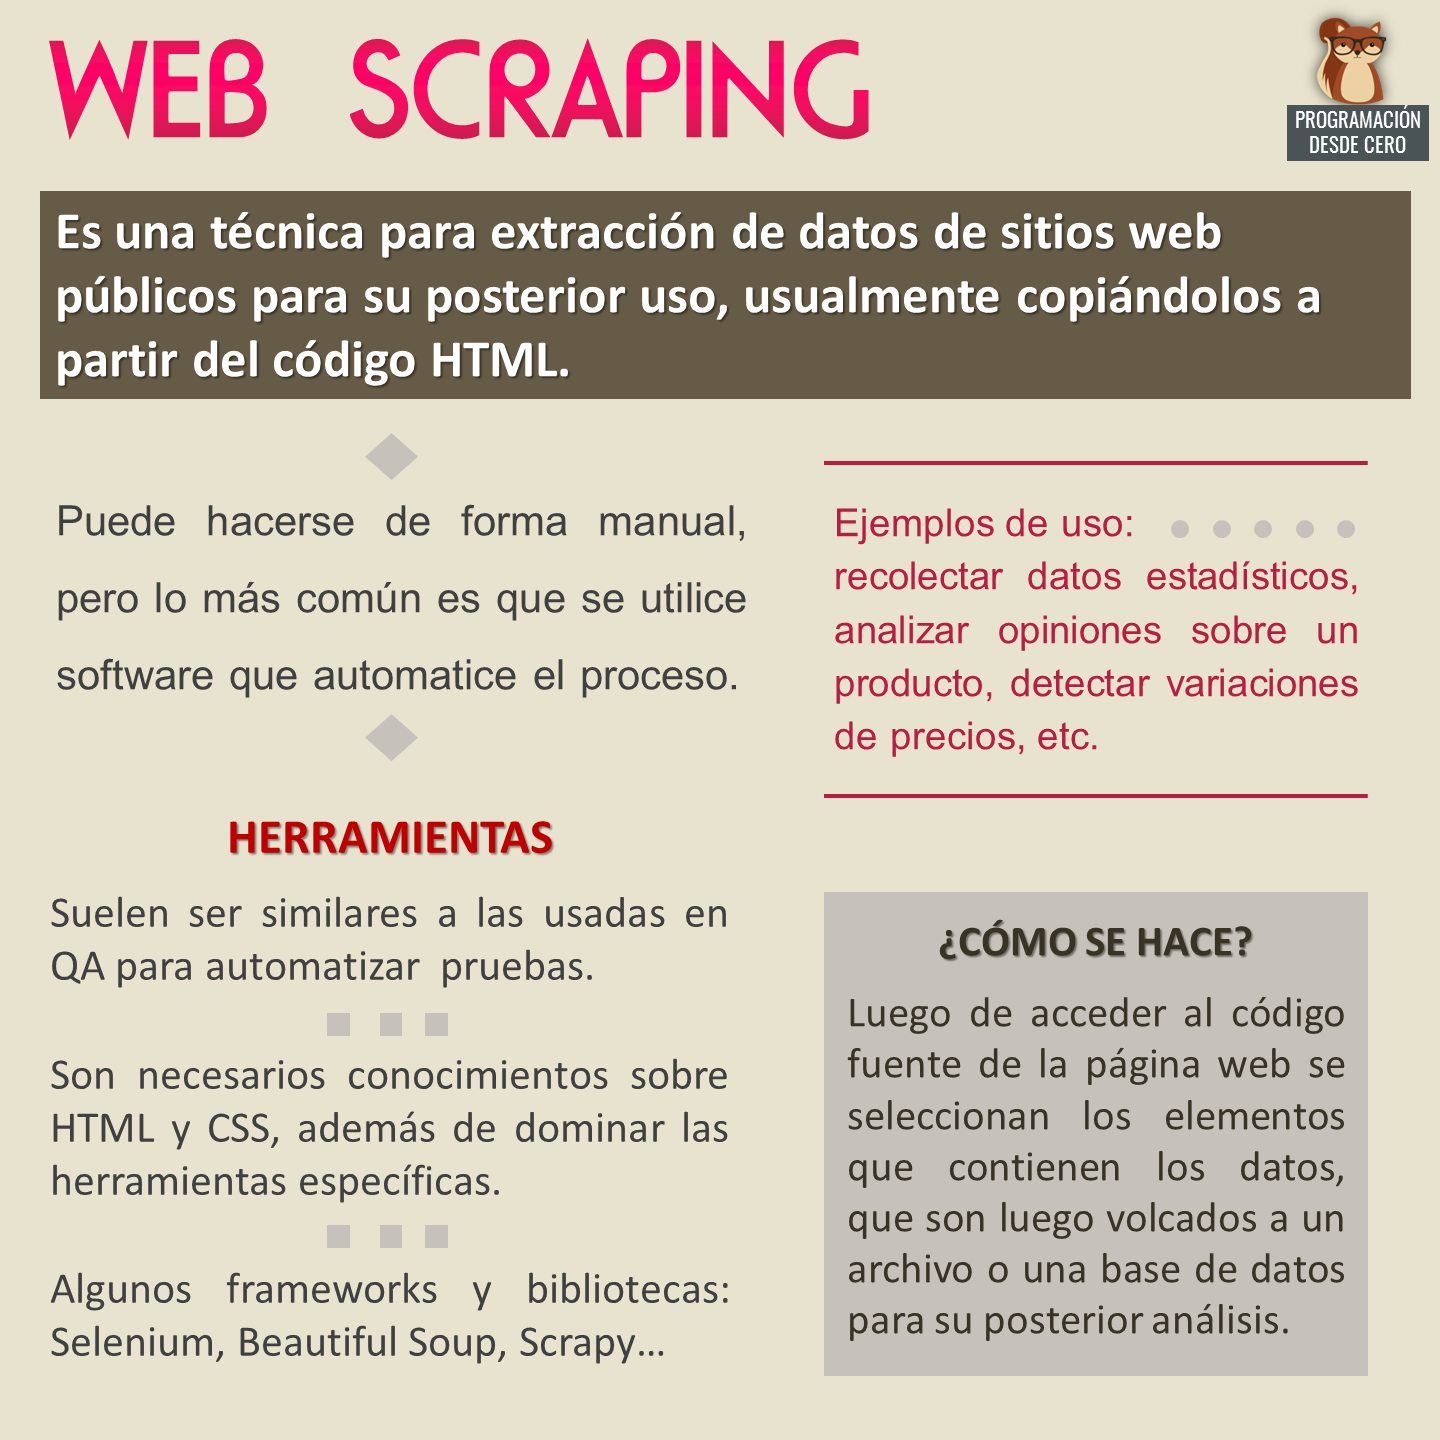 Web scraping